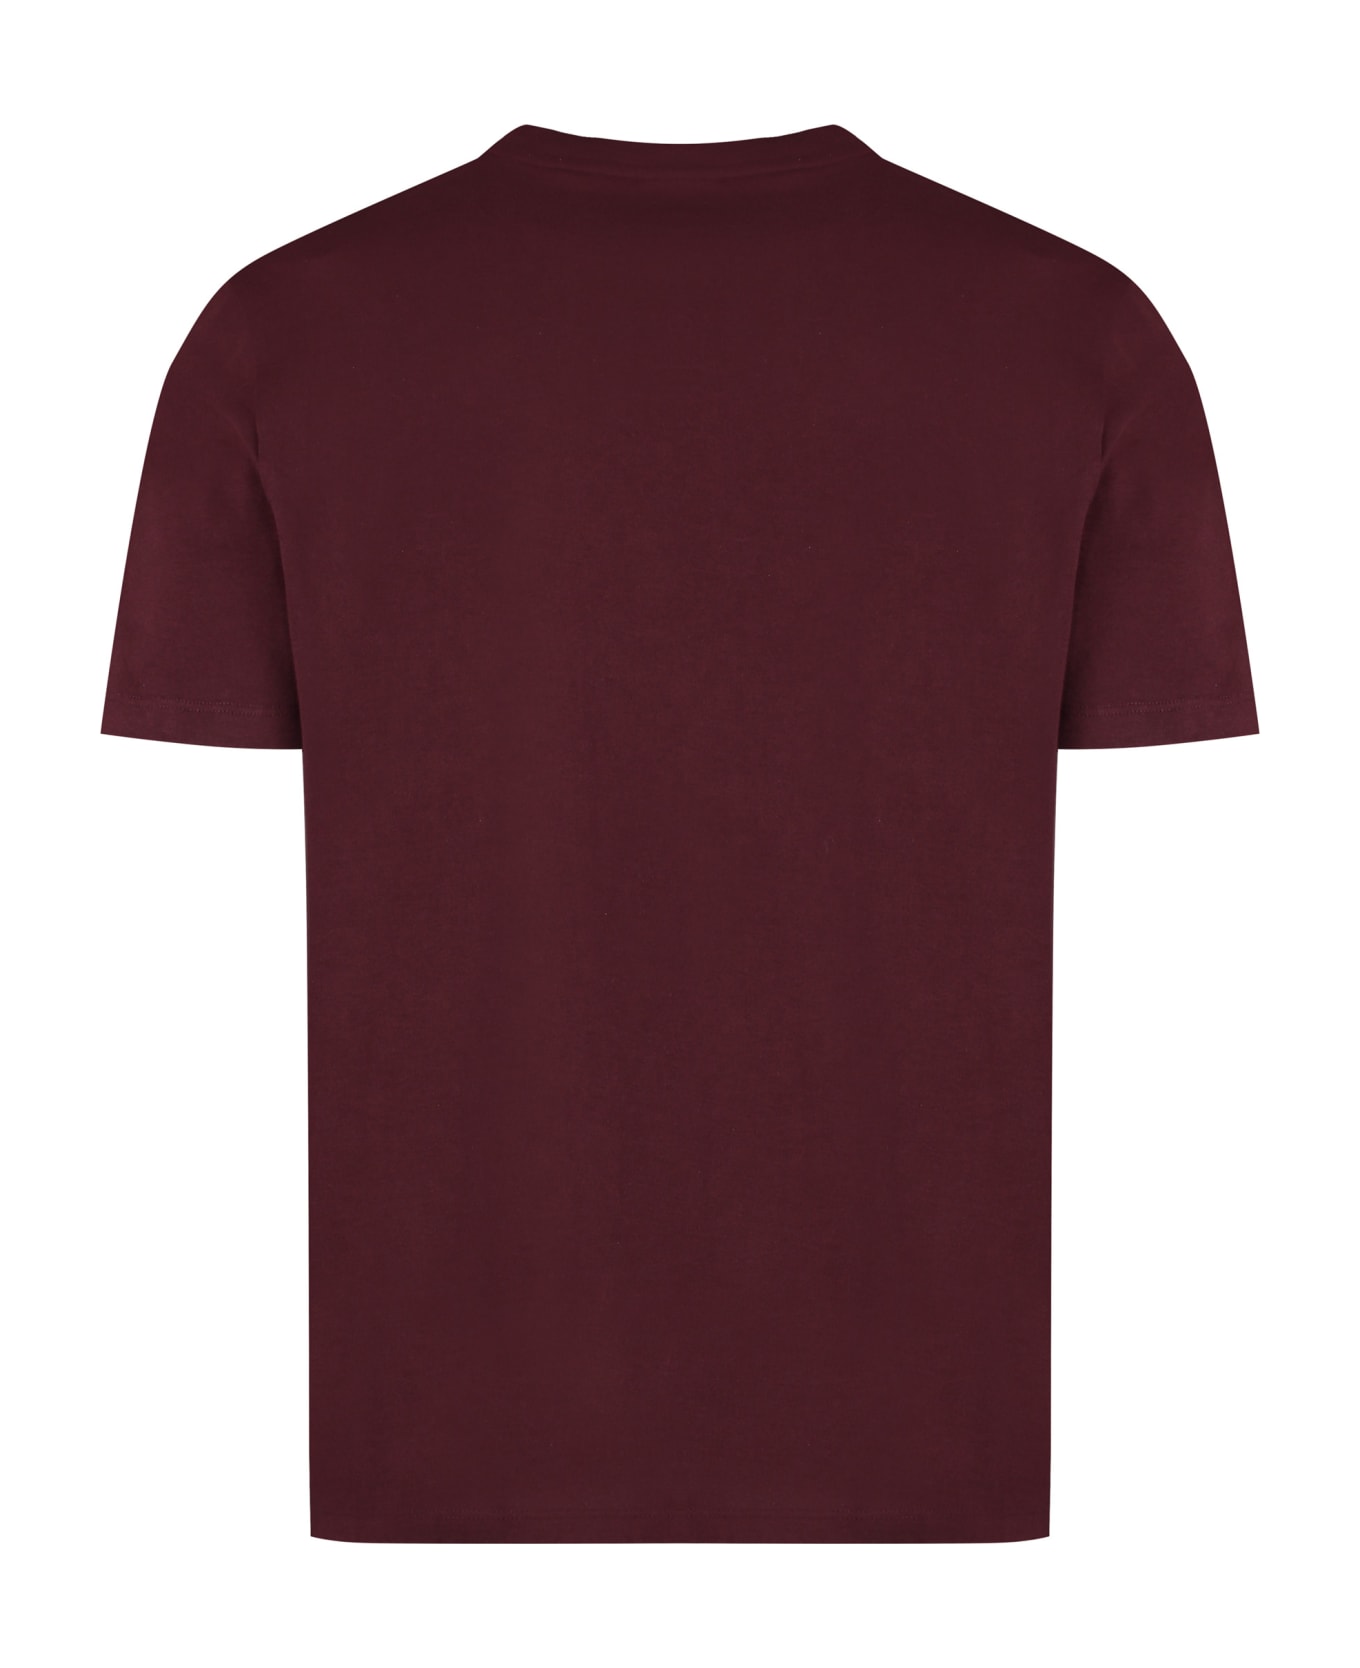 Hugo Boss Cotton Crew-neck T-shirt - Red-purple or grape シャツ